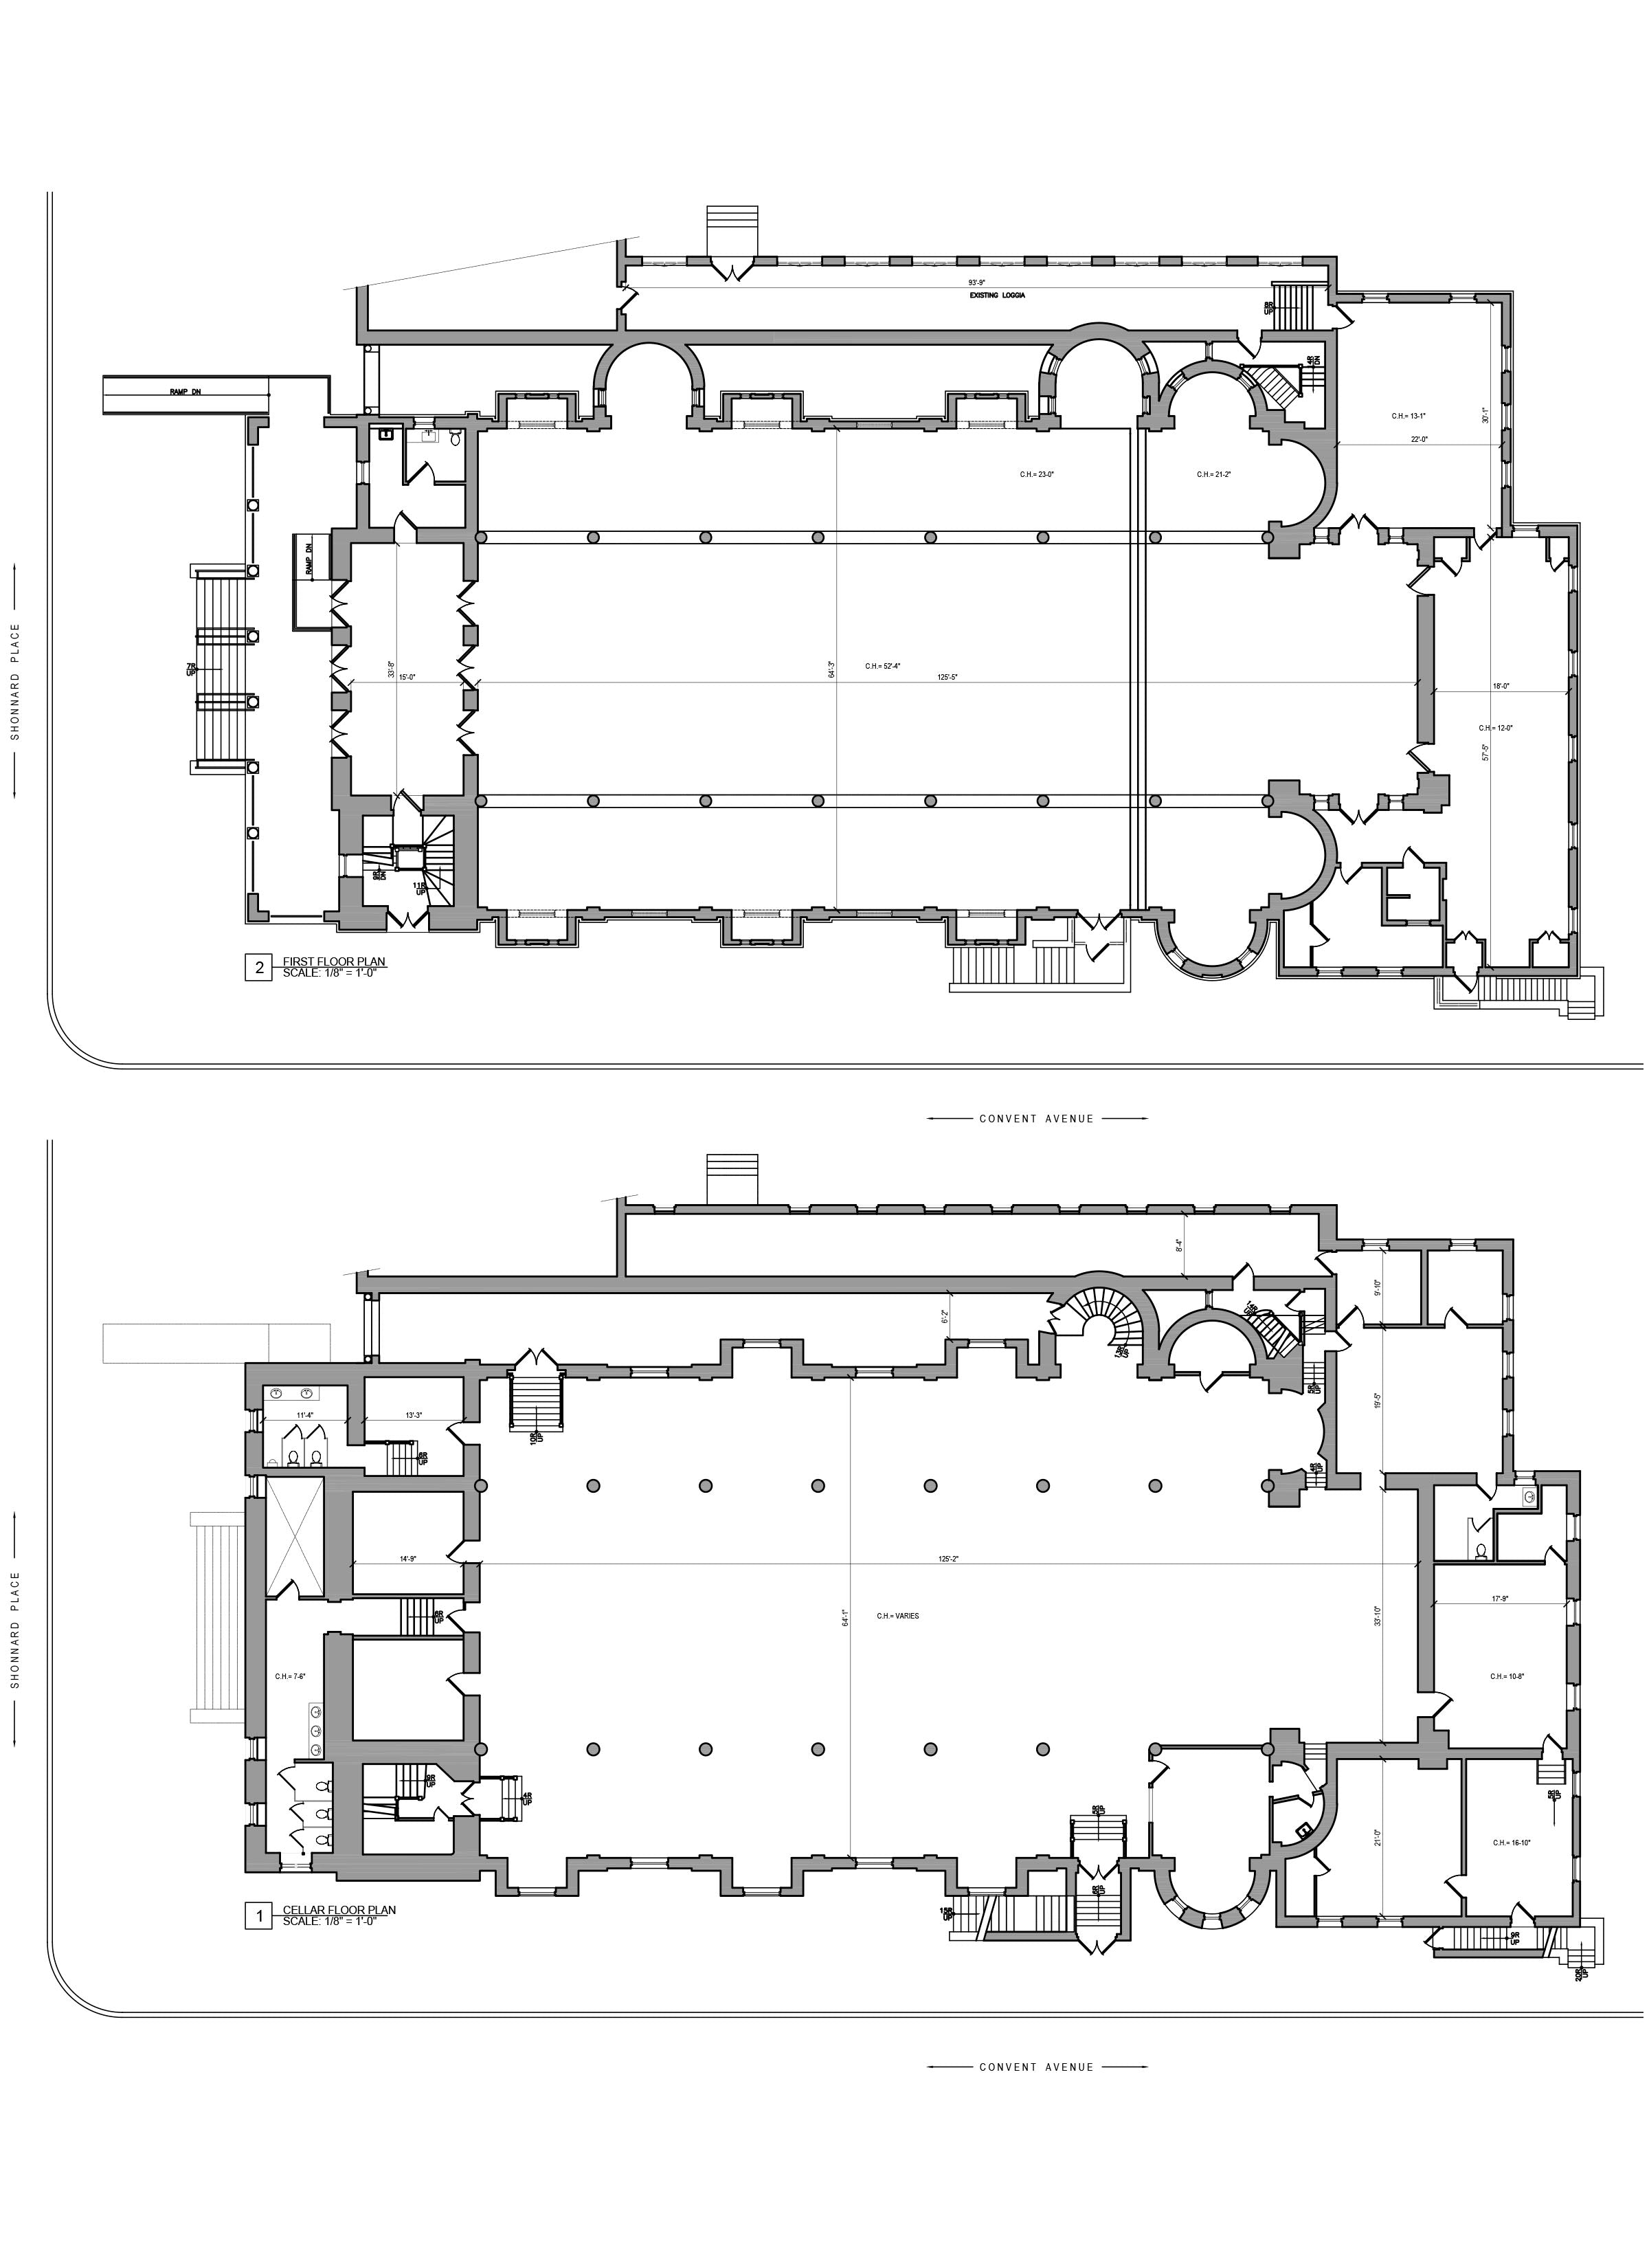 As Built Drawings - Building Survey_Church floor plan _Yonkers, NY